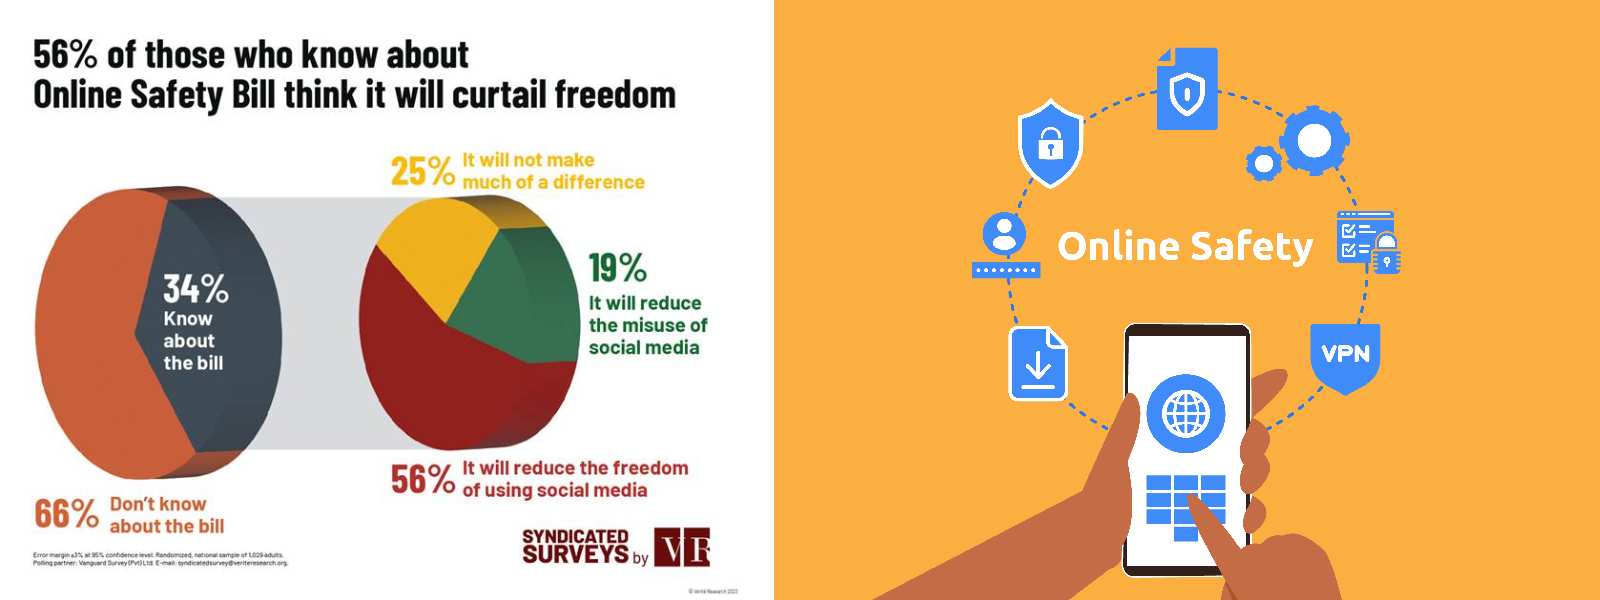 Online Safety Bill will curtail freedom - Survey